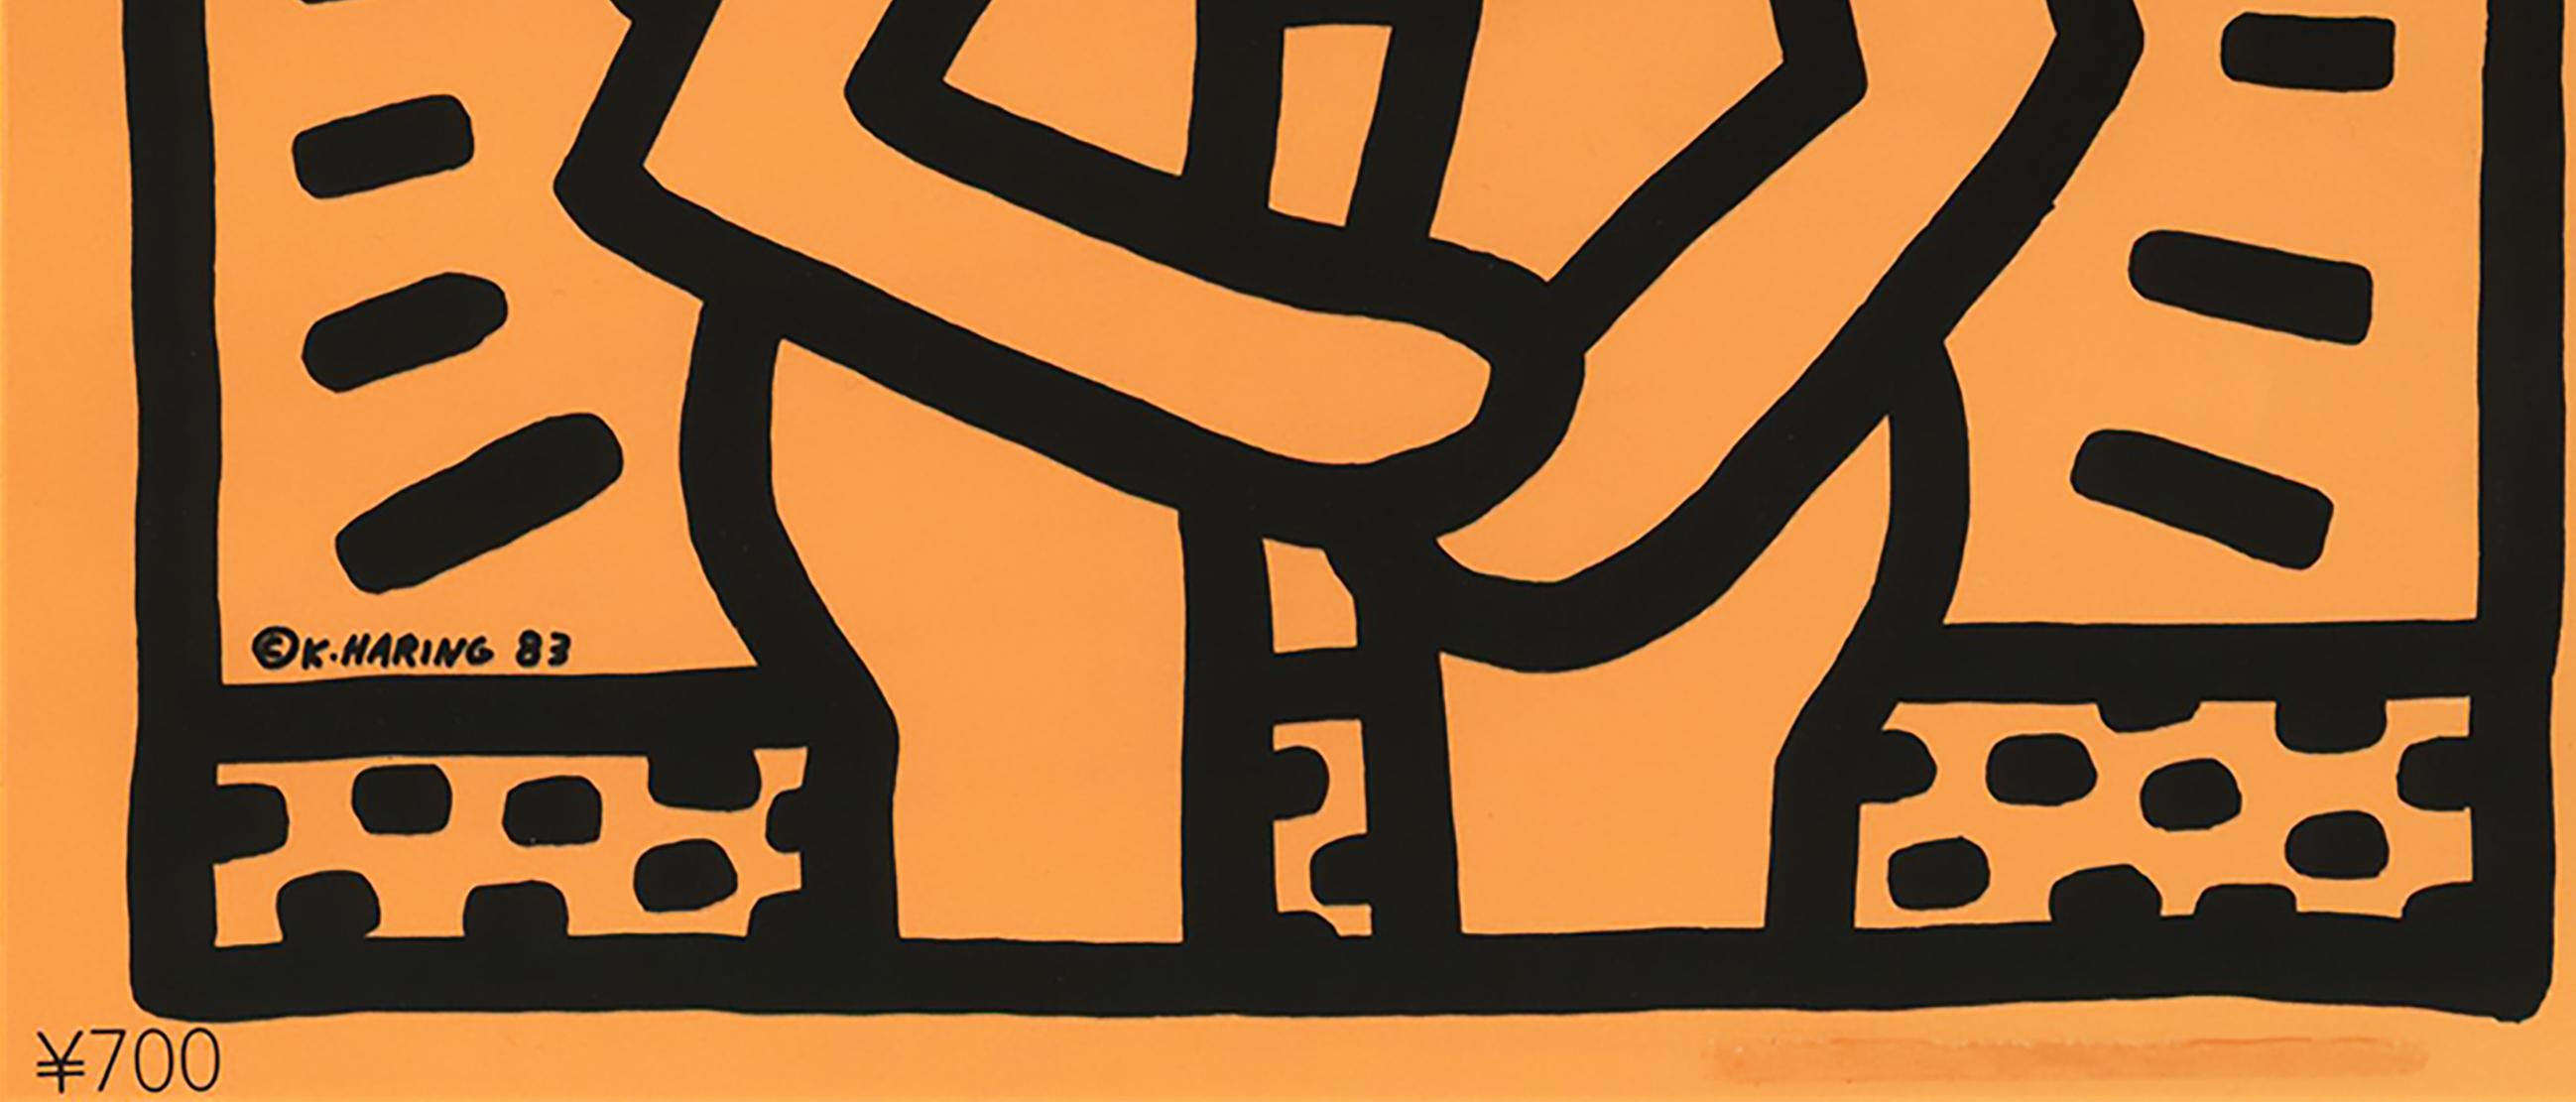 Keith Haring record art 1983:
David BOWIE 